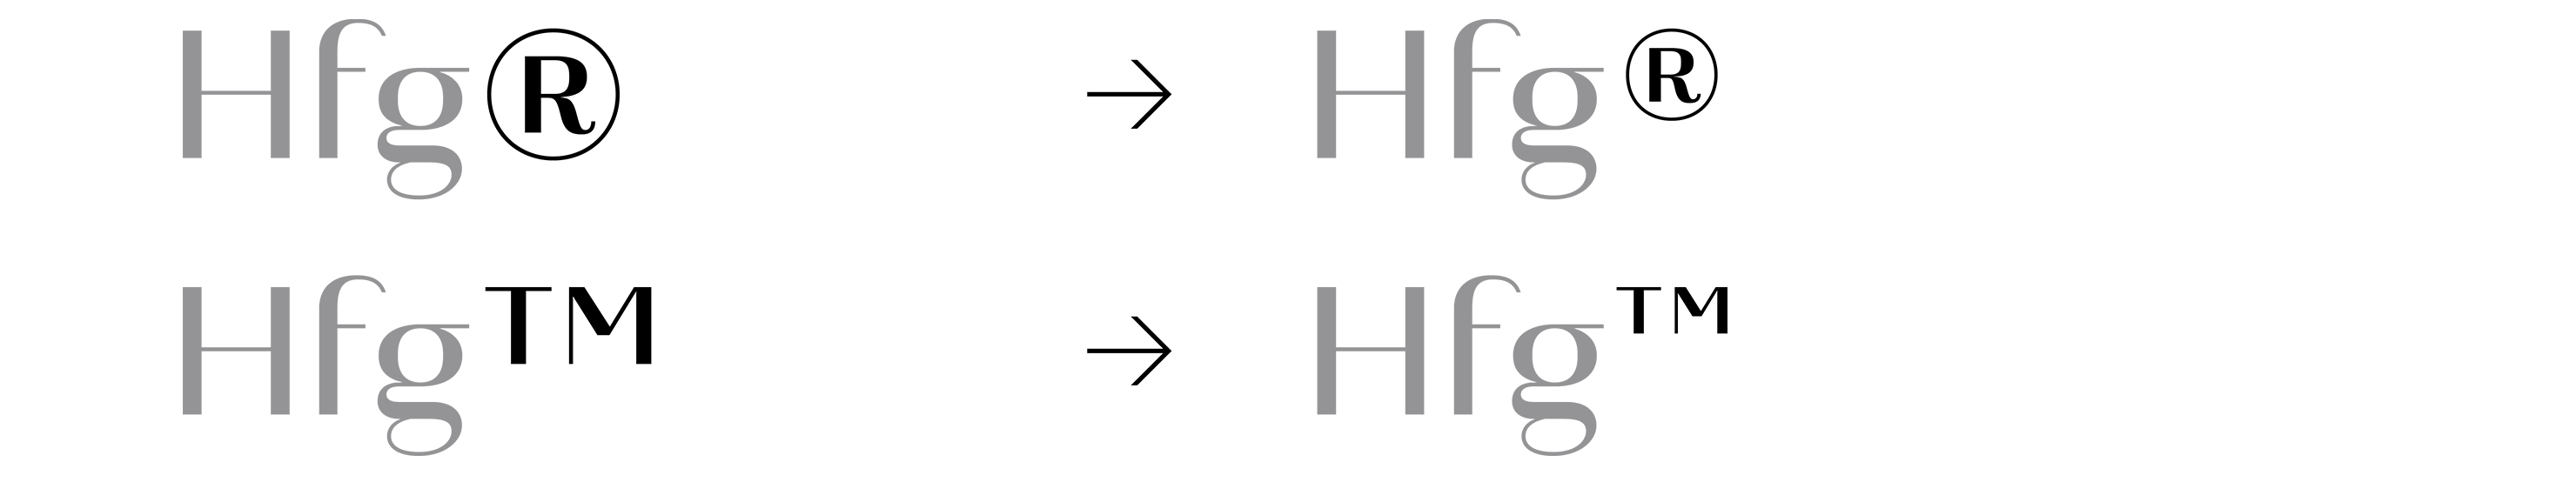 Typeface-Heimat-Display-F10-Atlas-Font-Foundry